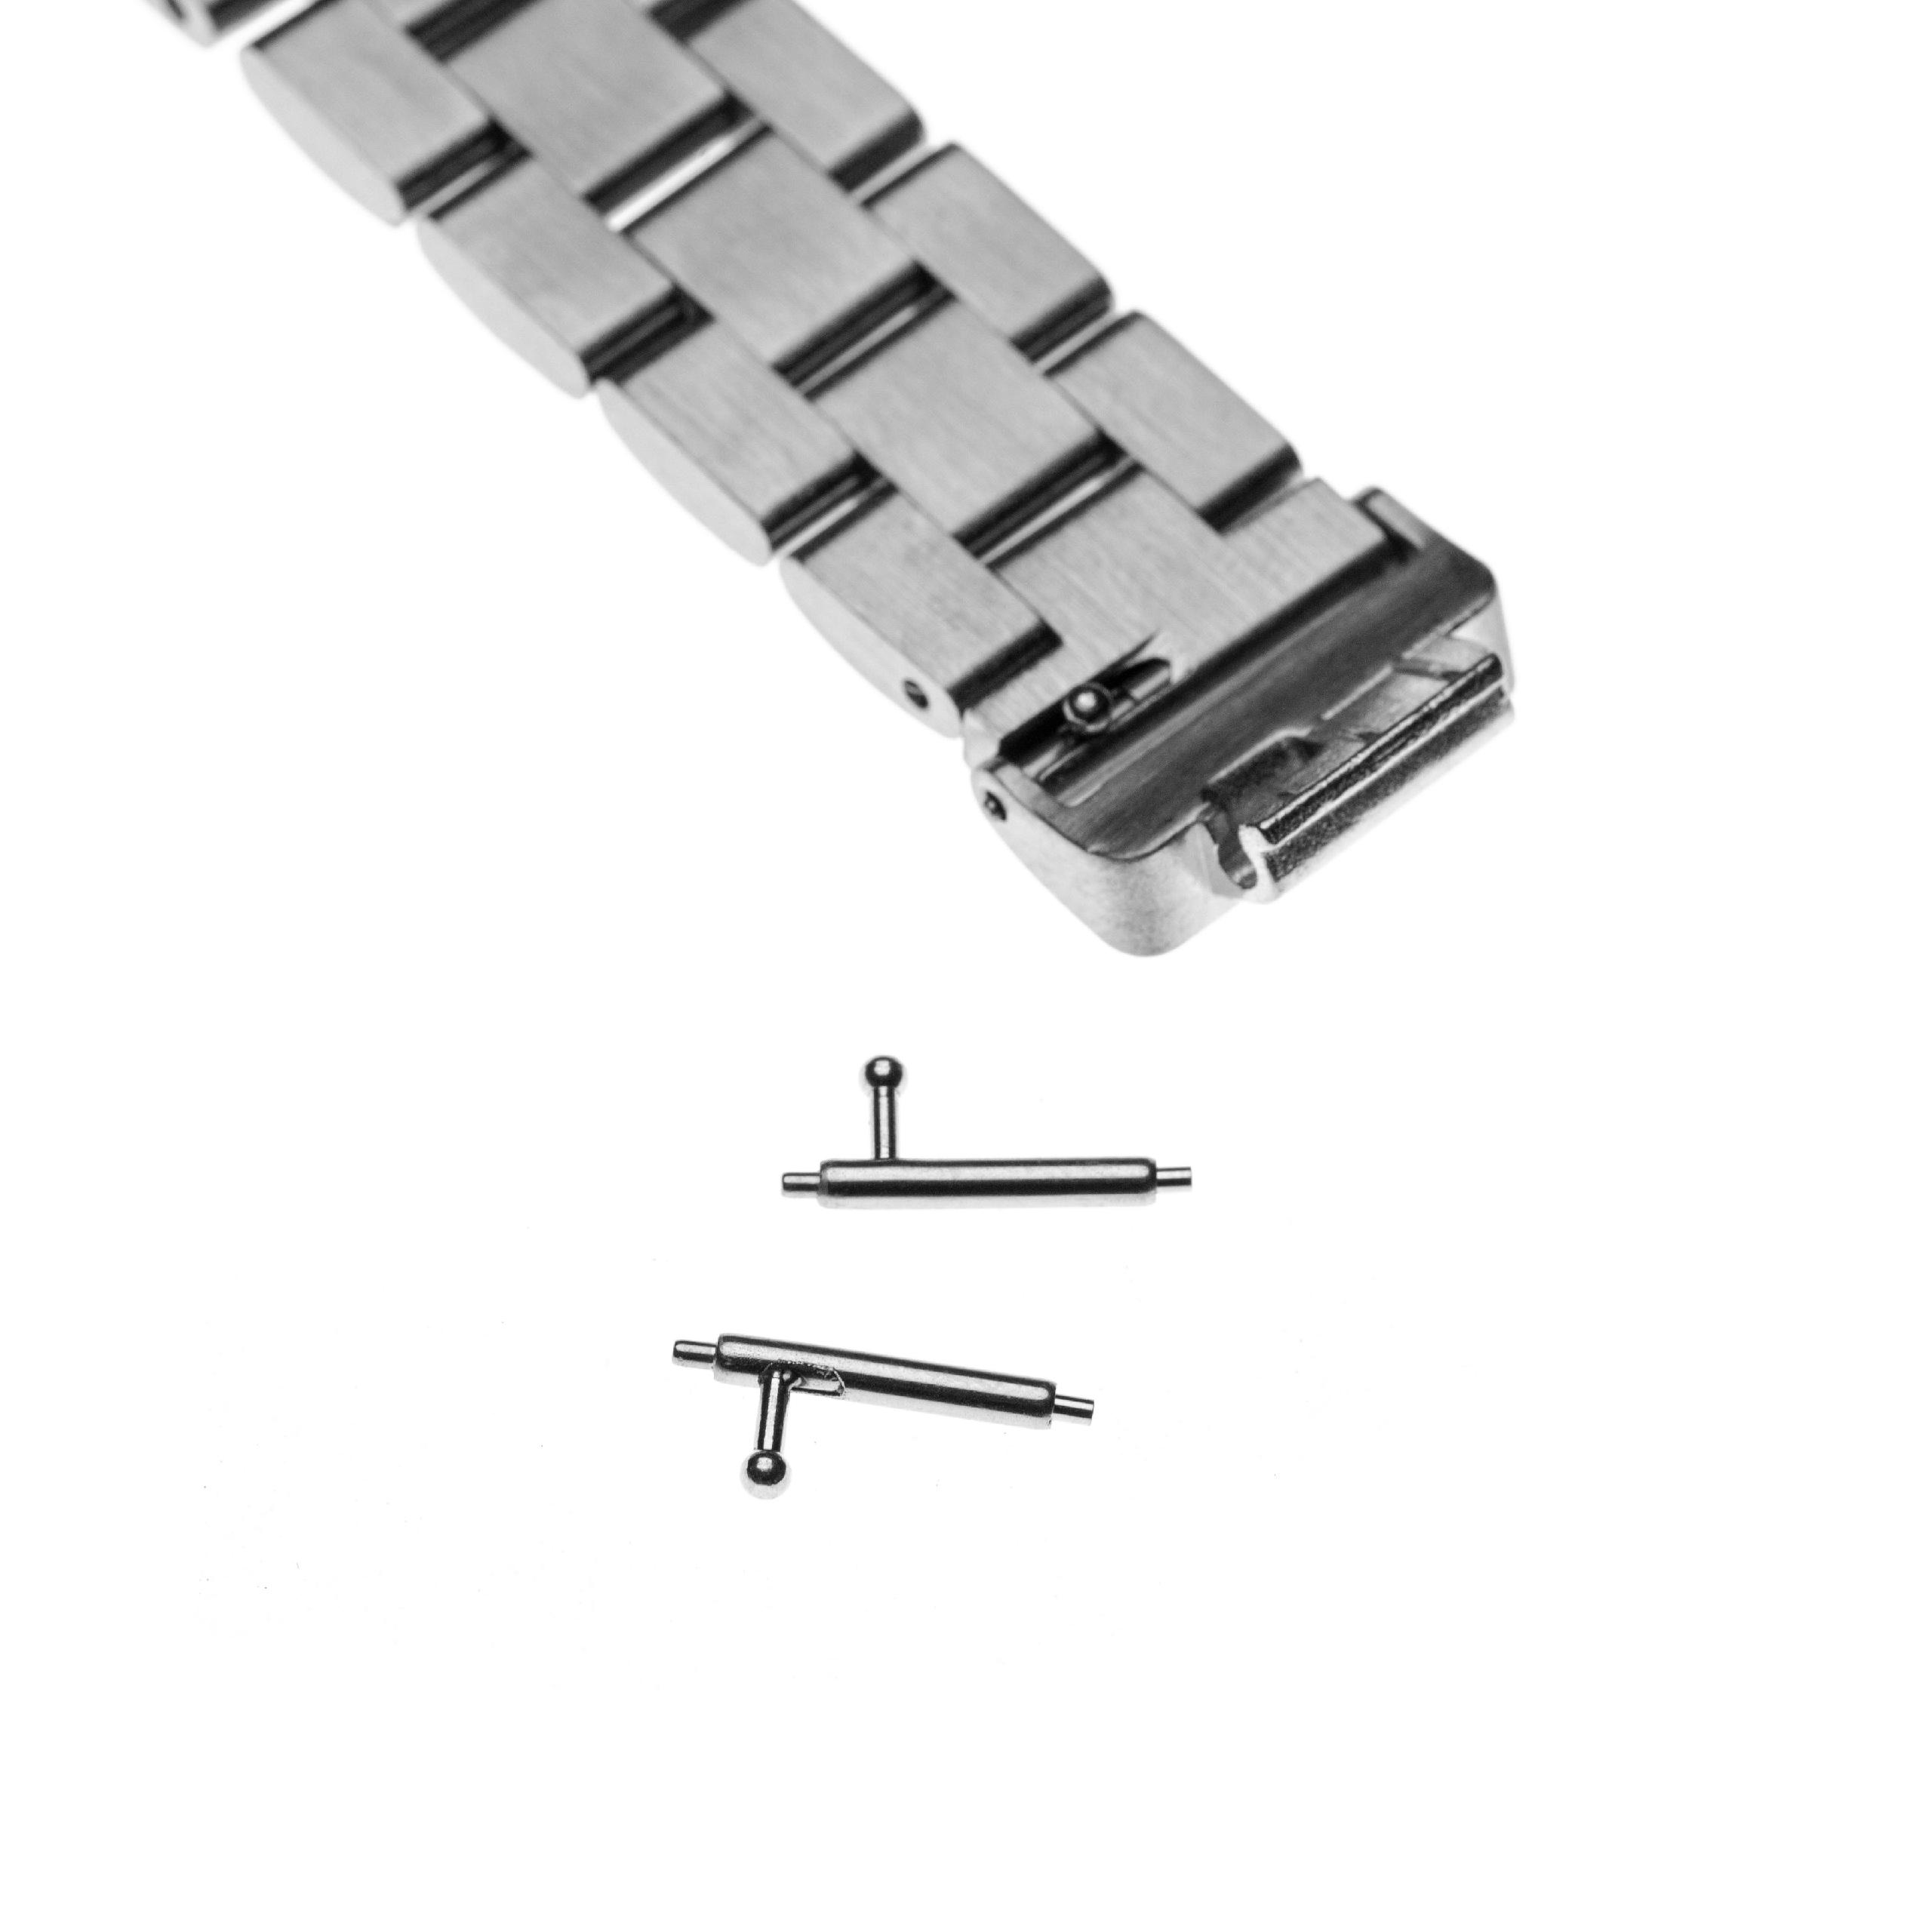 correa para Fitbit smartwatch - largo 18 cm, ancho 14 mm, acero inoxidable, plata